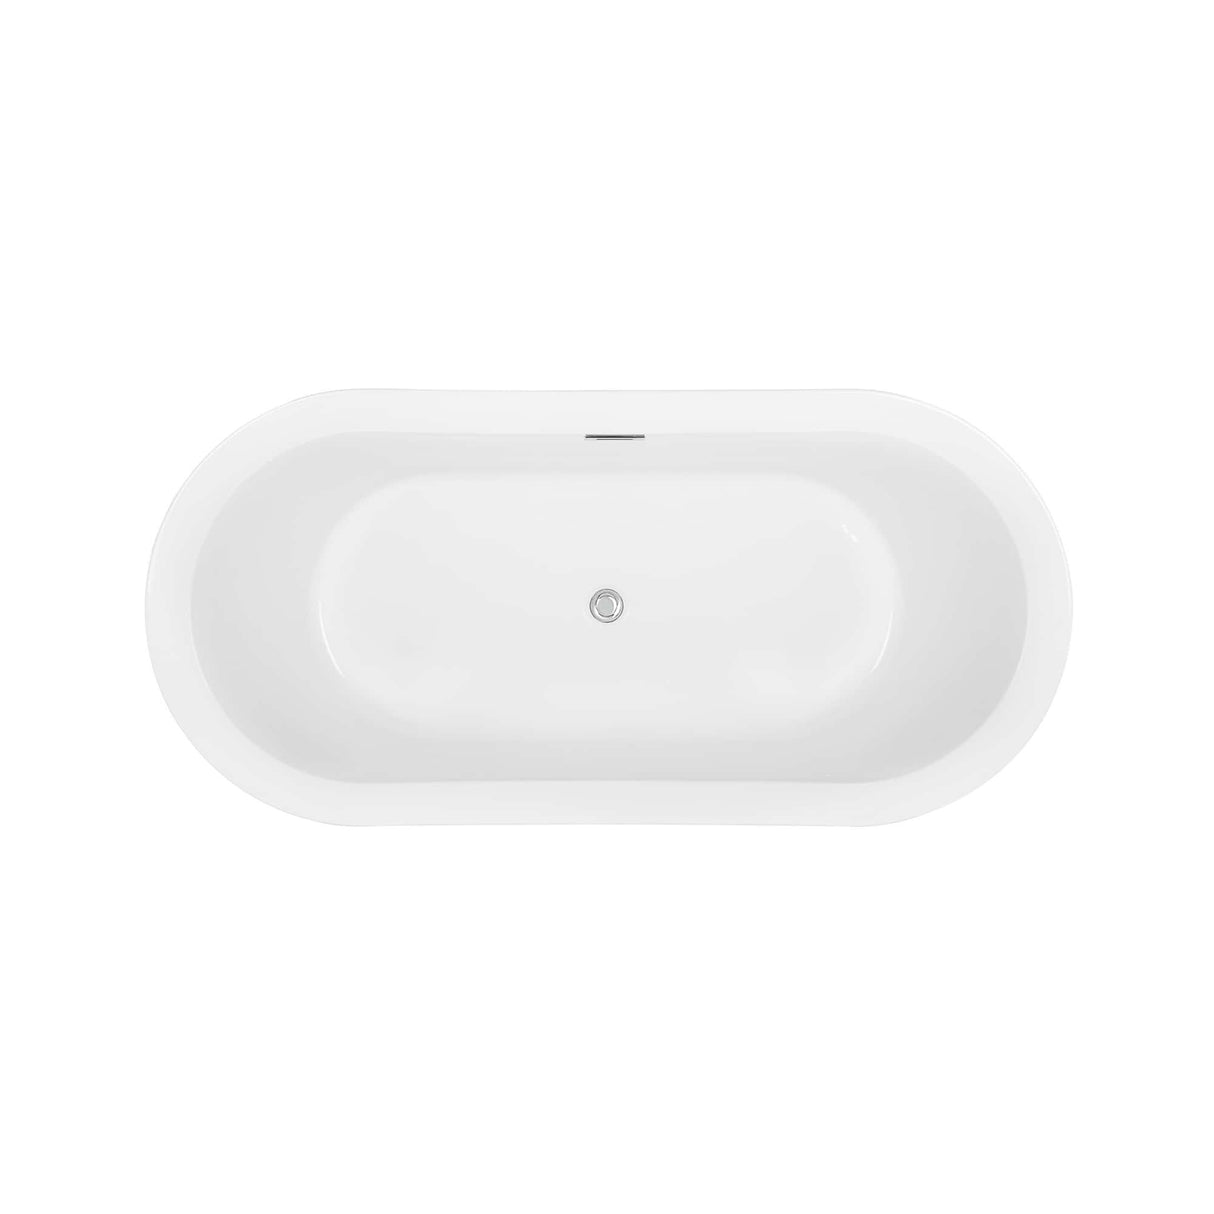 Empava-59FT1505 luxury freestanding acrylic soaking oval modern white SPA bathtub aerial view